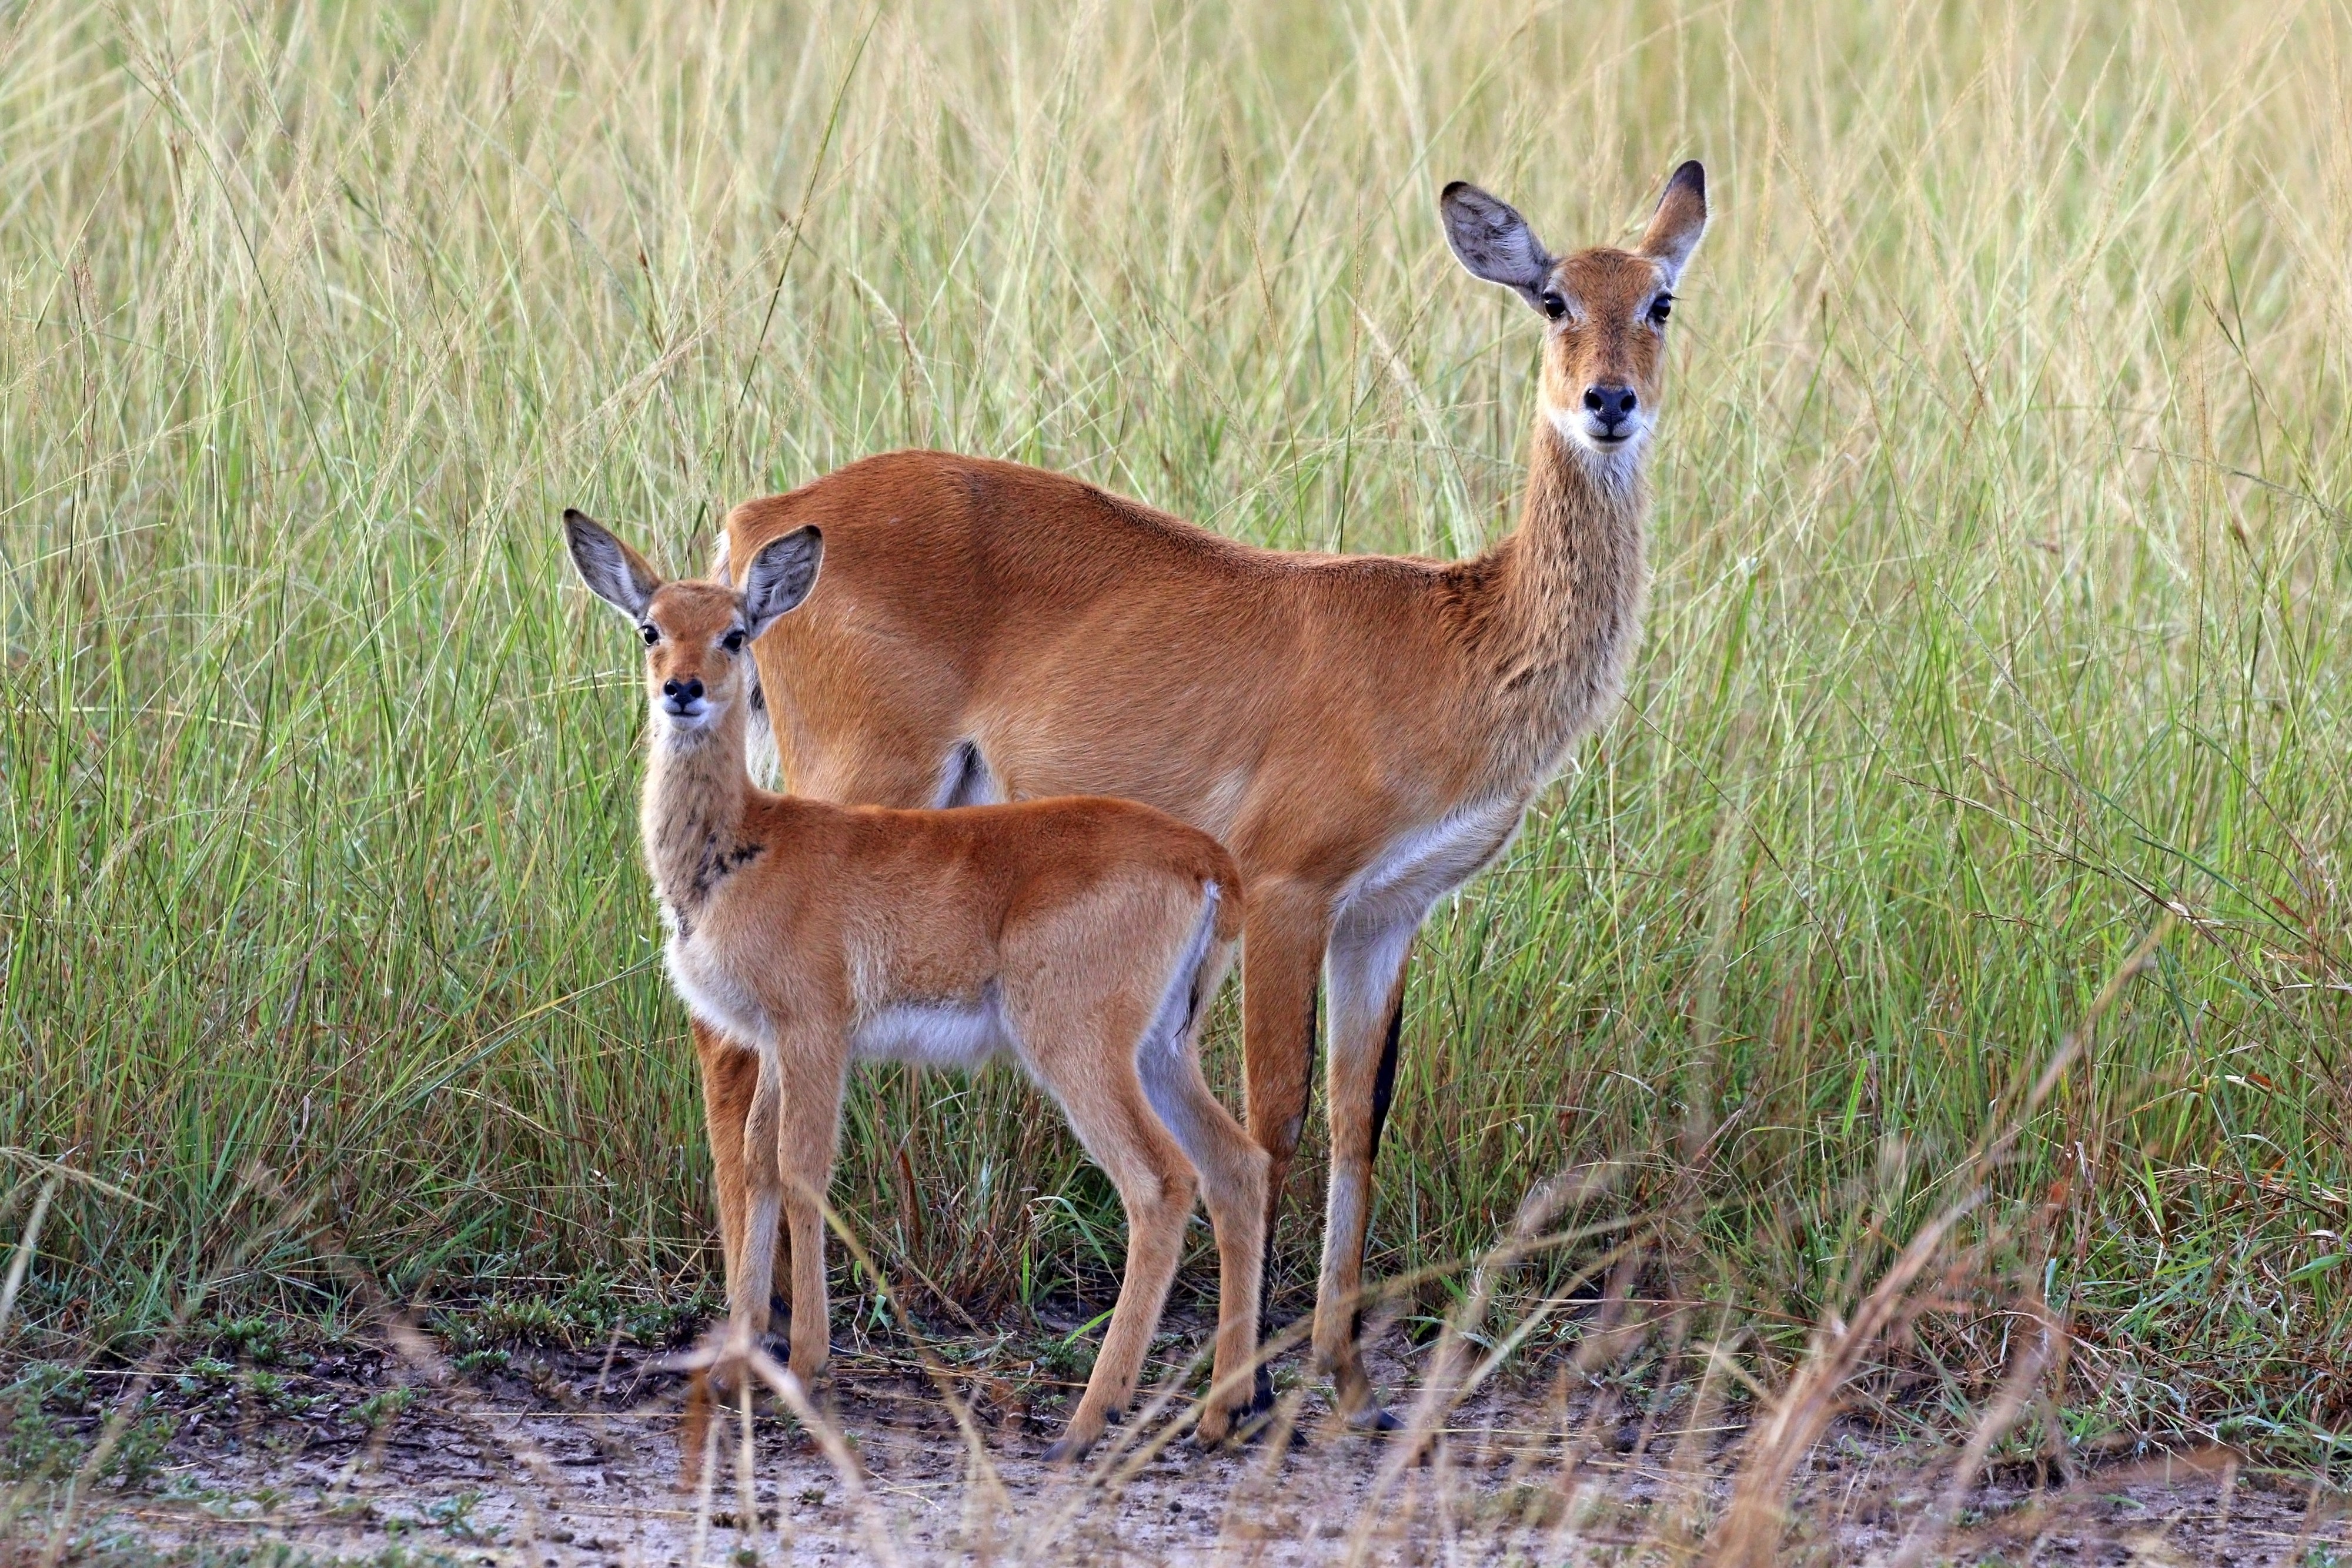 Ugandan kobs (Kobus kob thomasi) female and calf